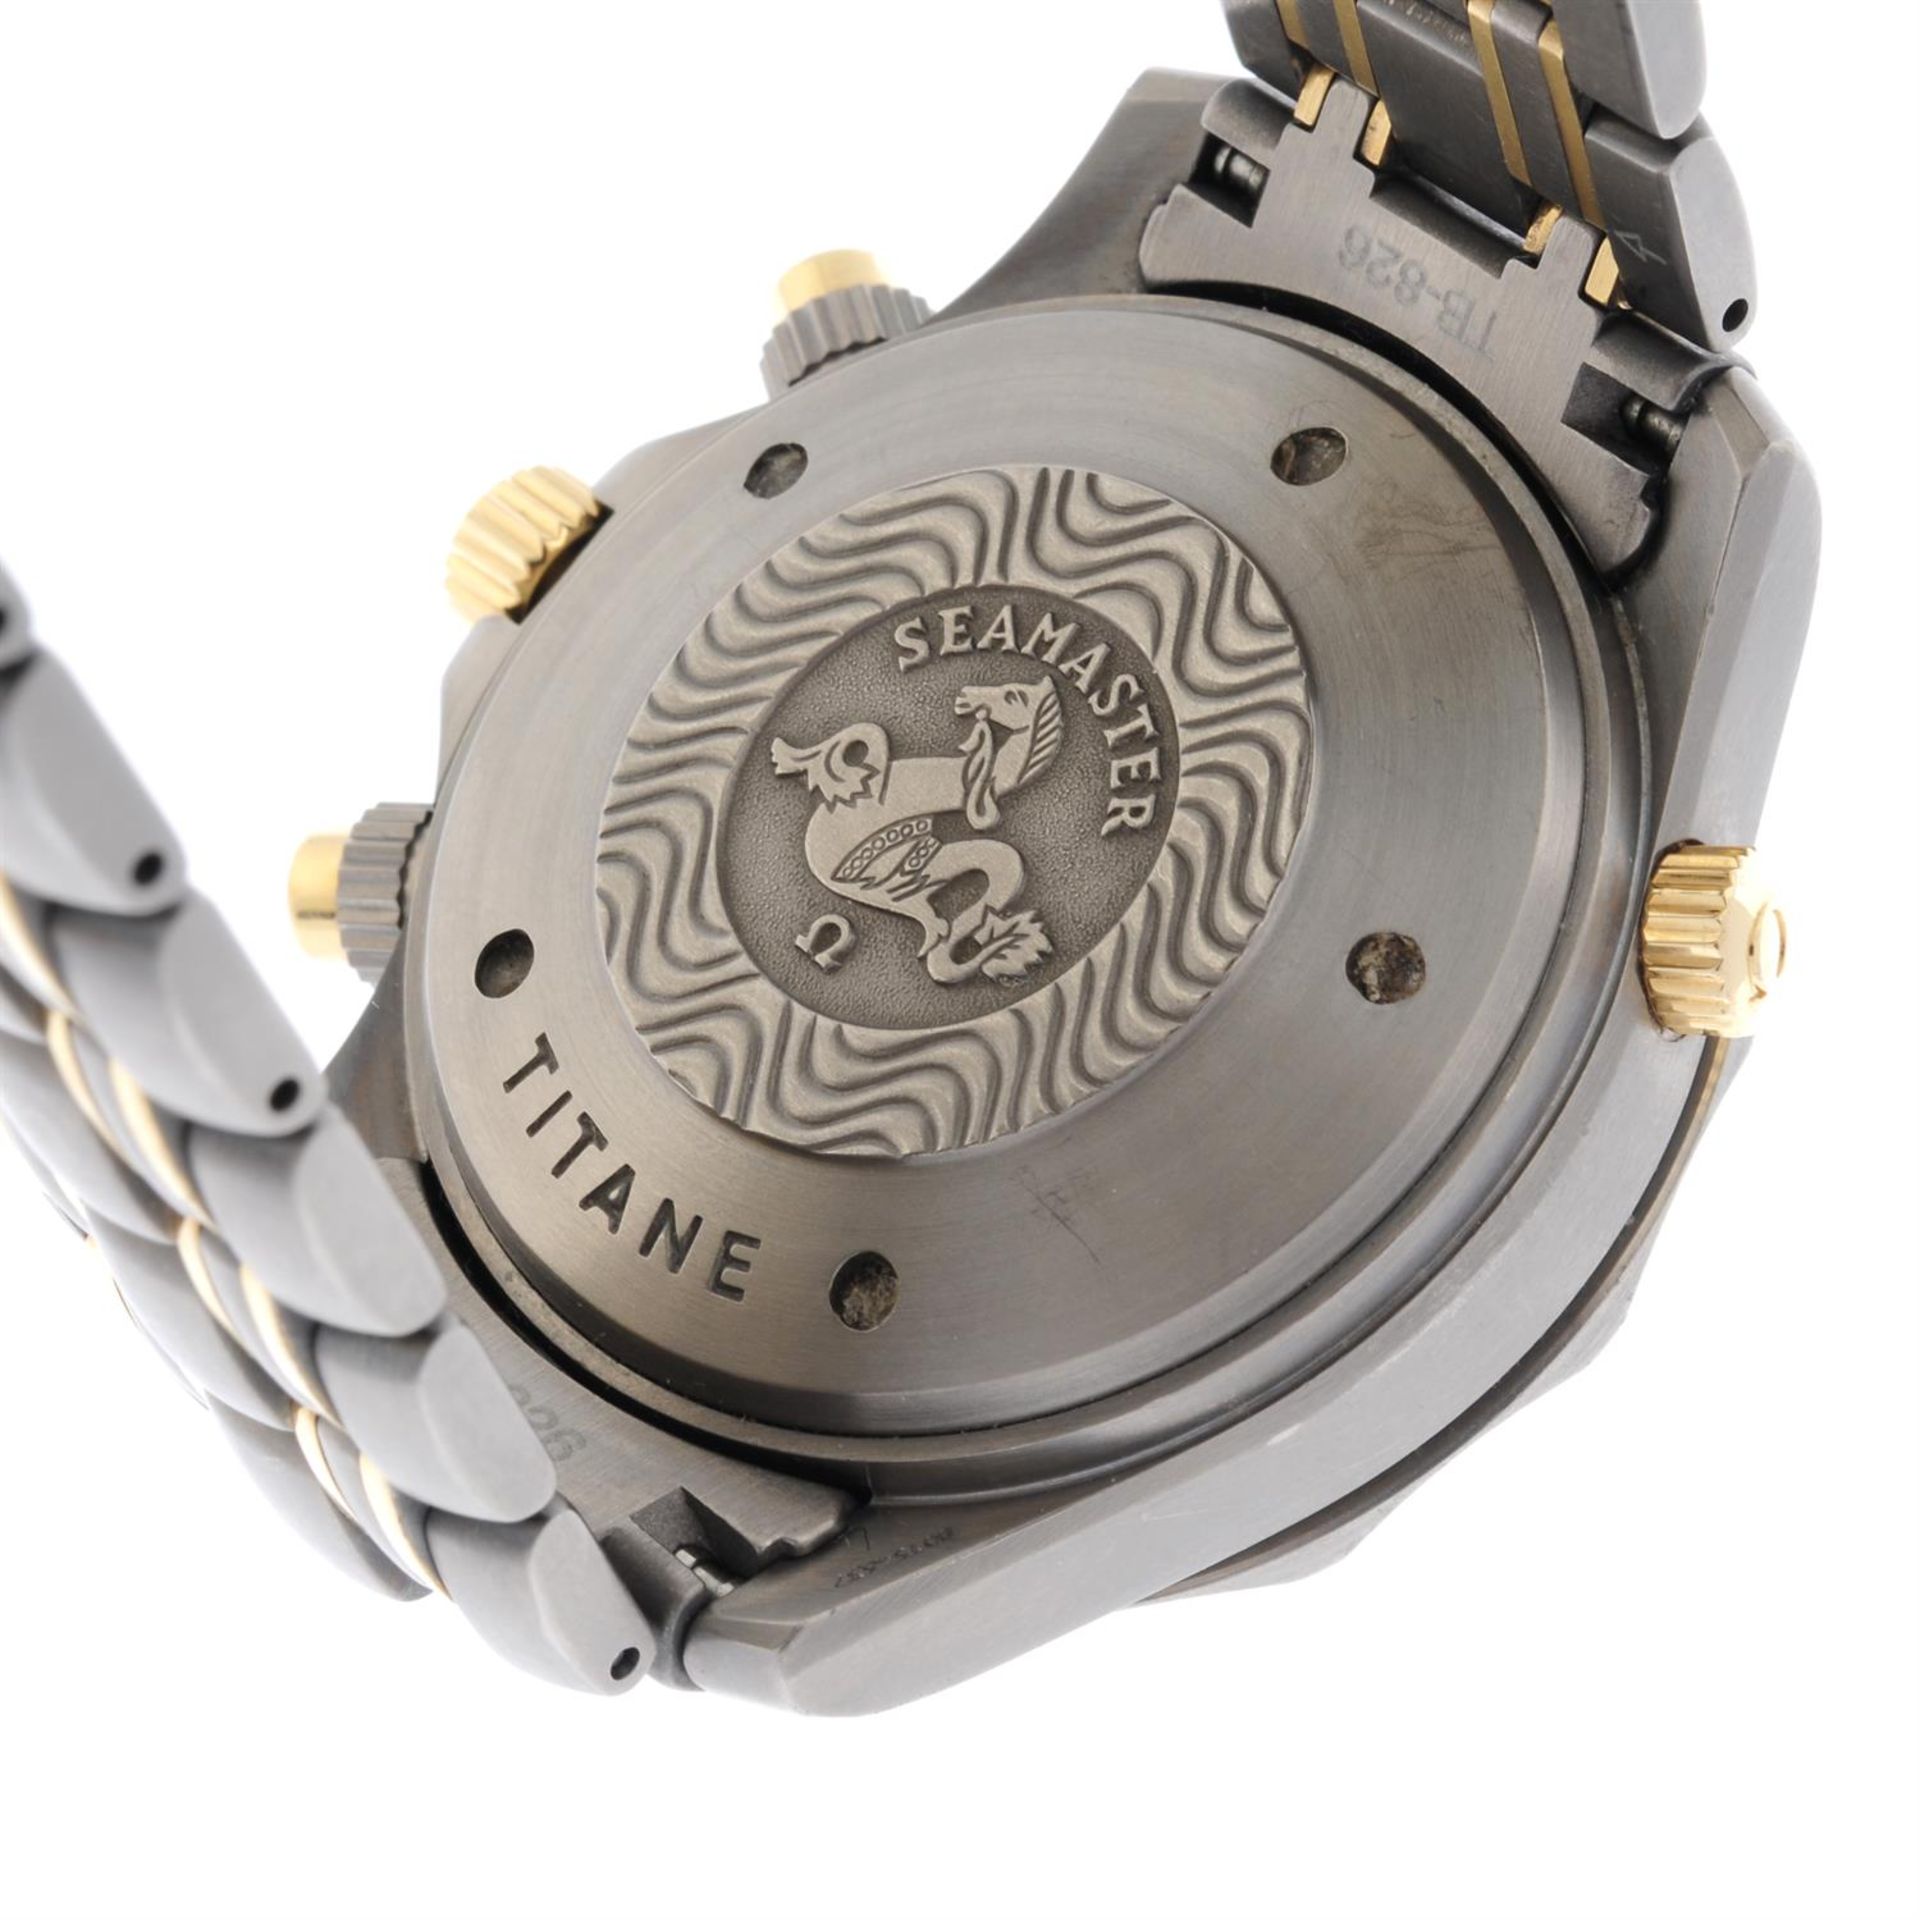 OMEGA - a bi-metal Seamaster Professional chronograph bracelet watch, 42mm. - Image 4 of 5